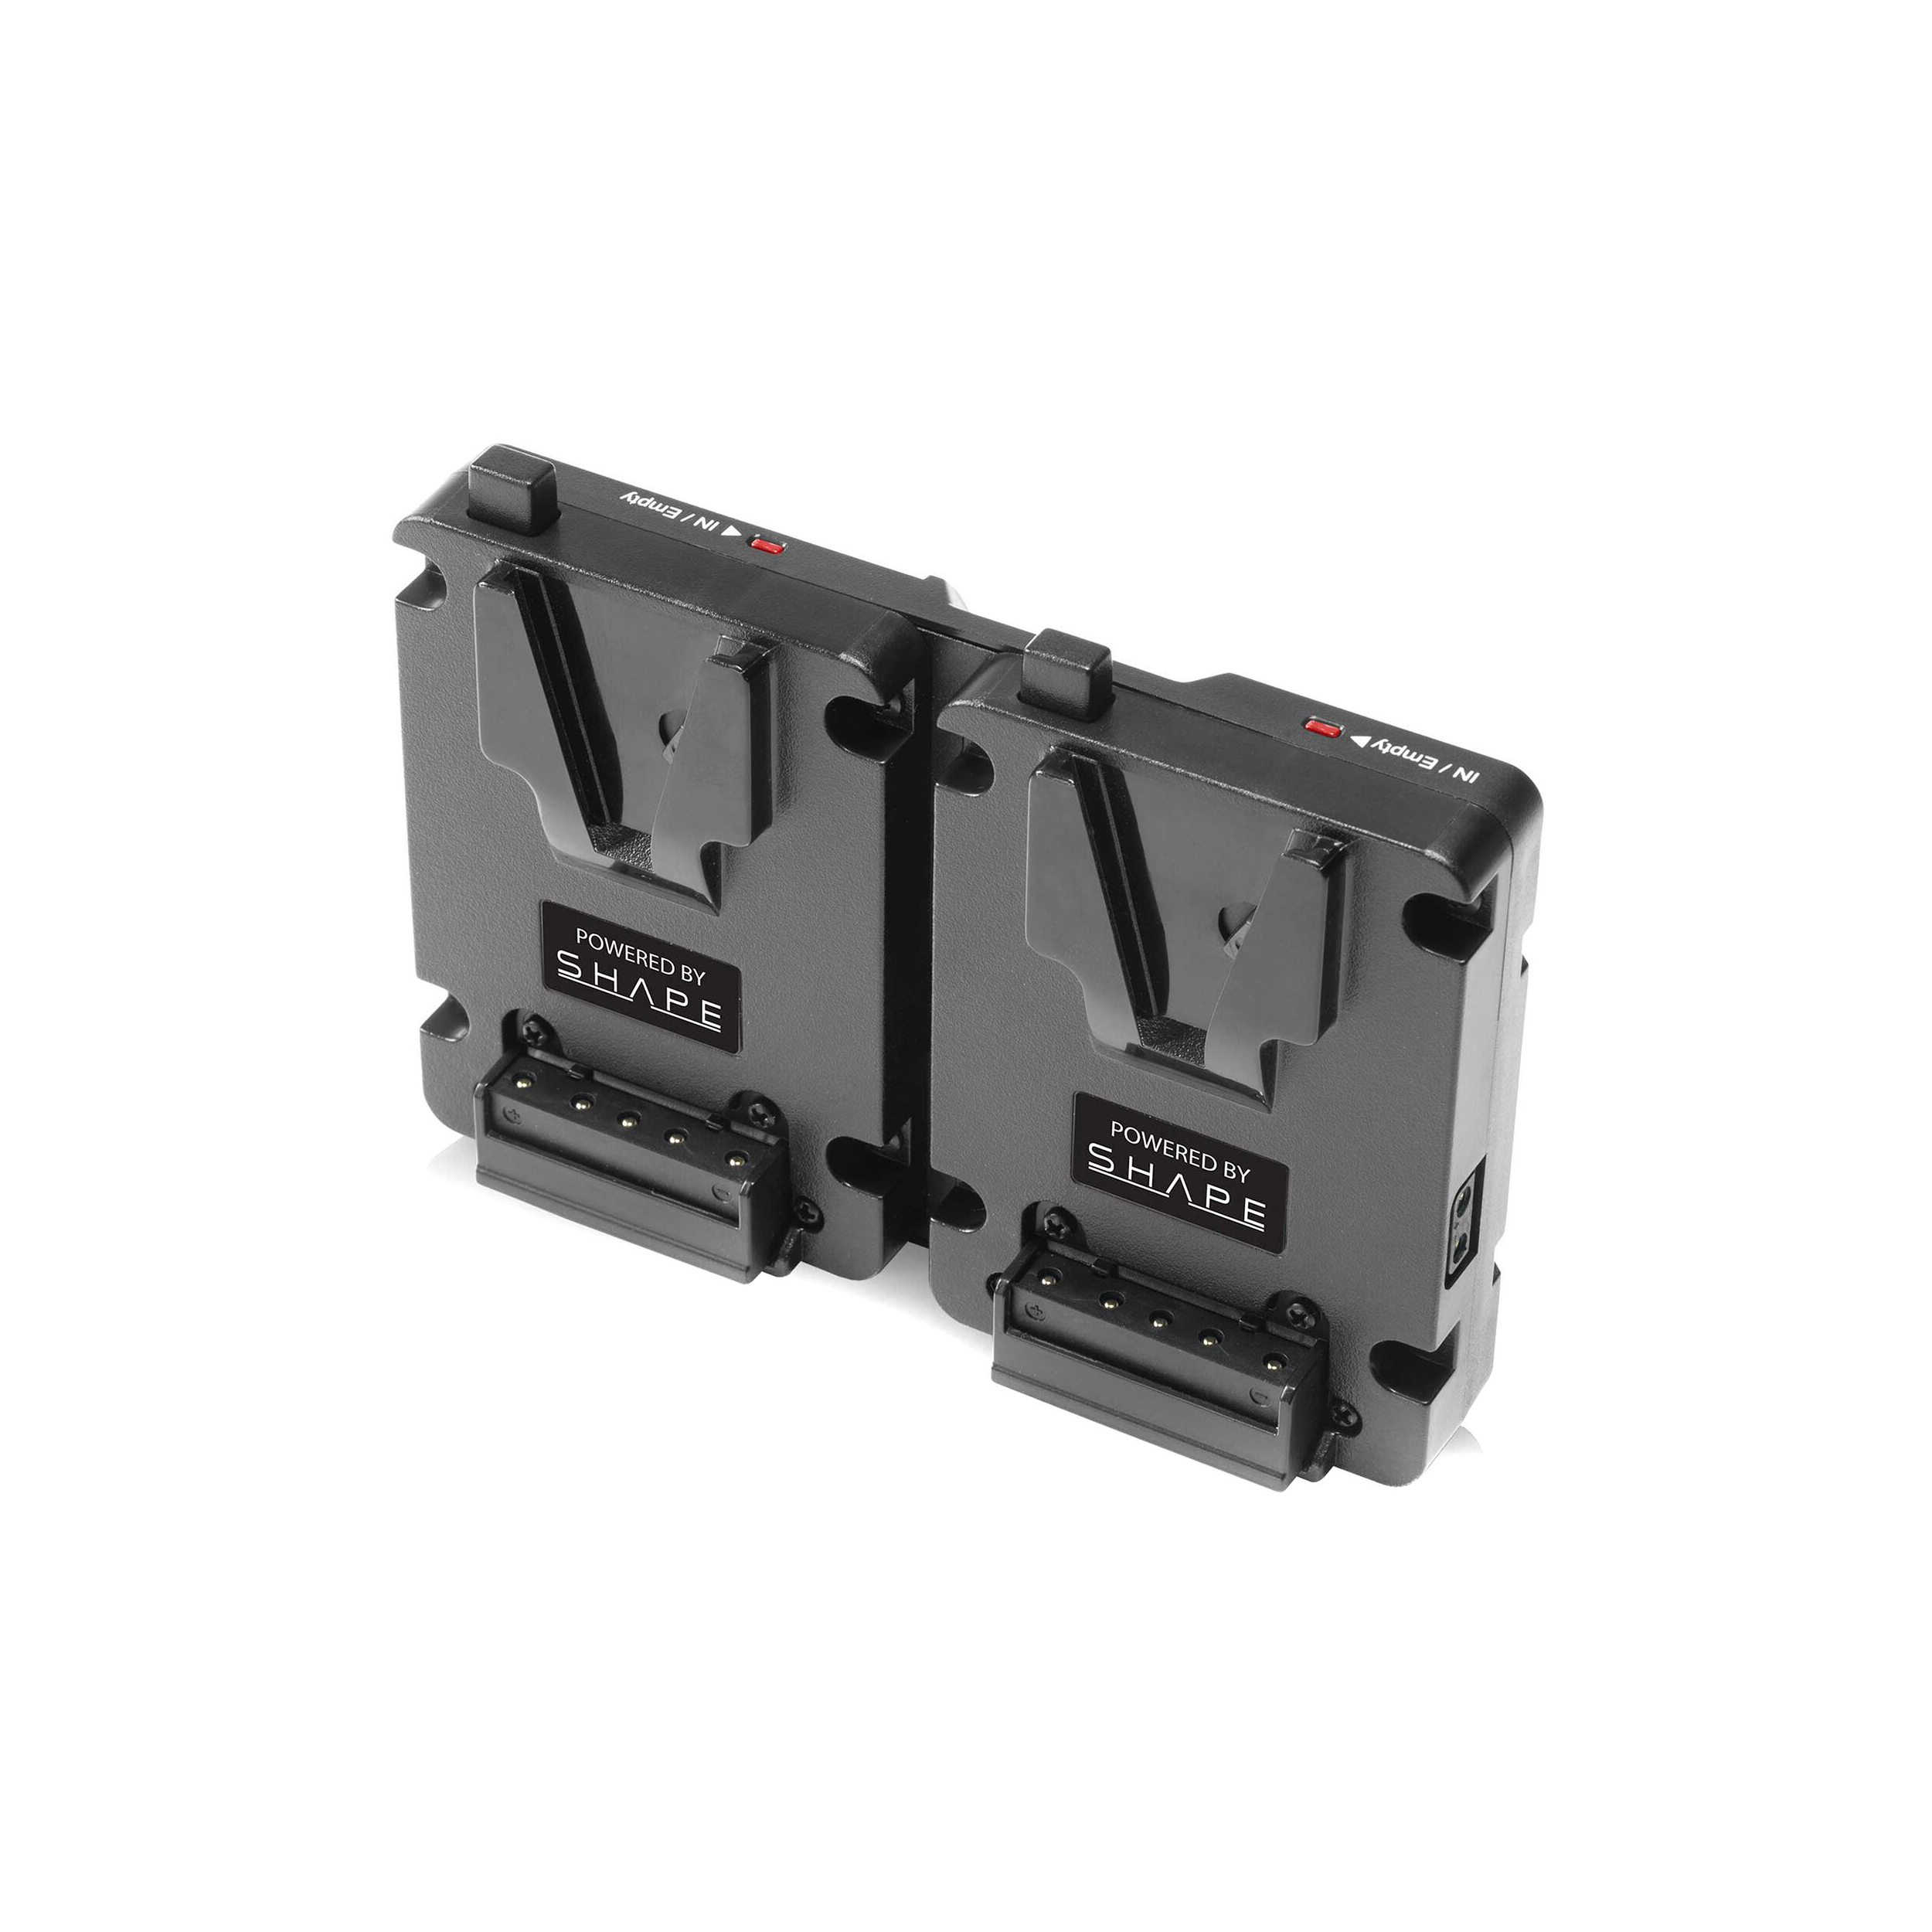 SHAPE Dual V-Mount Hot Swap Mini Battery Battery Plate